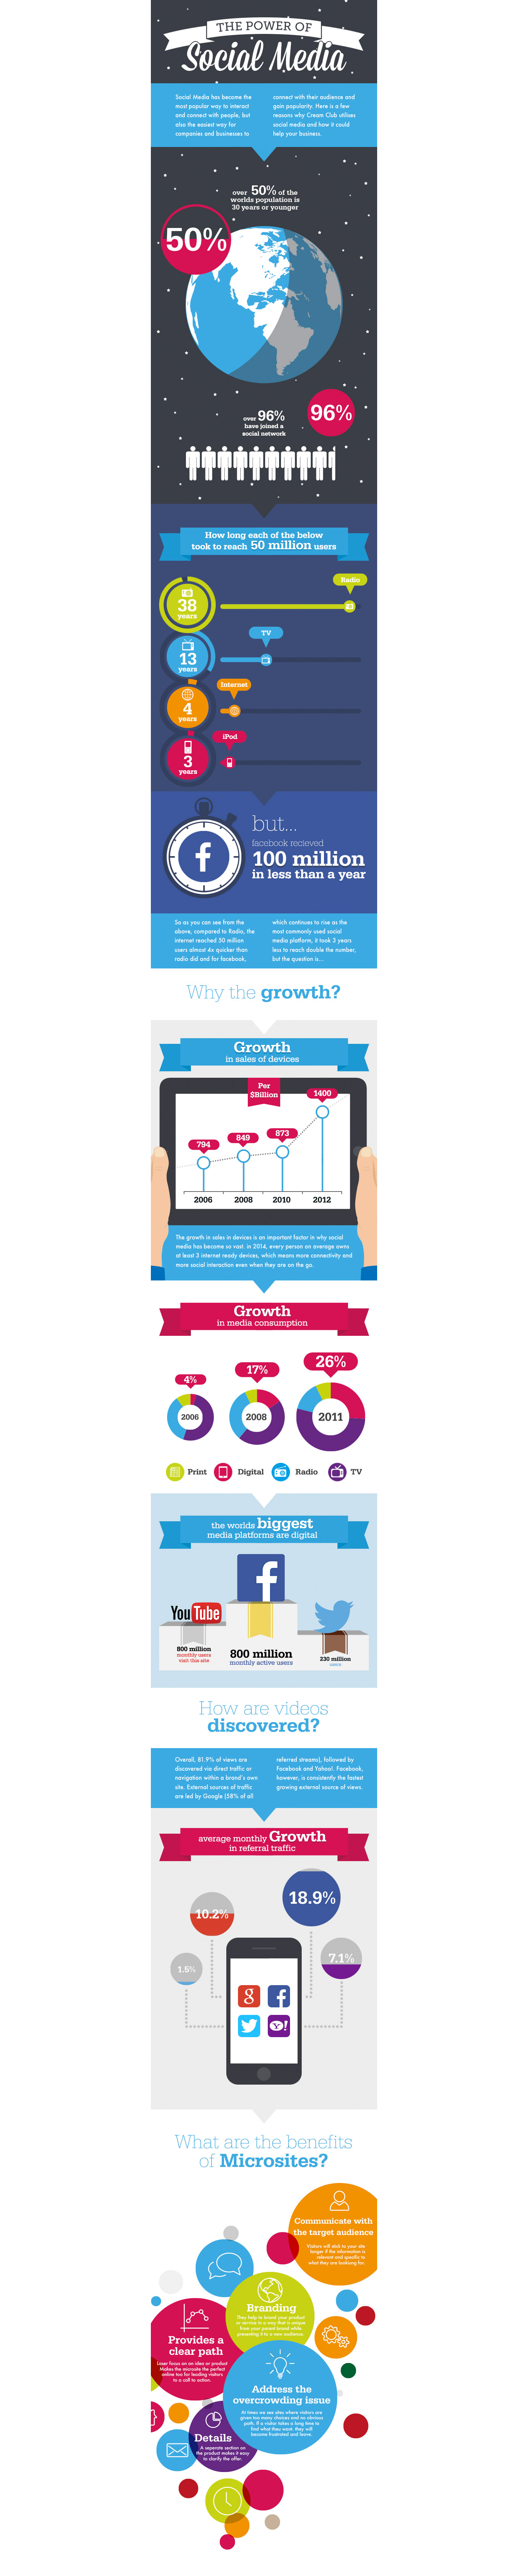 infographic social media statistics illustrated information